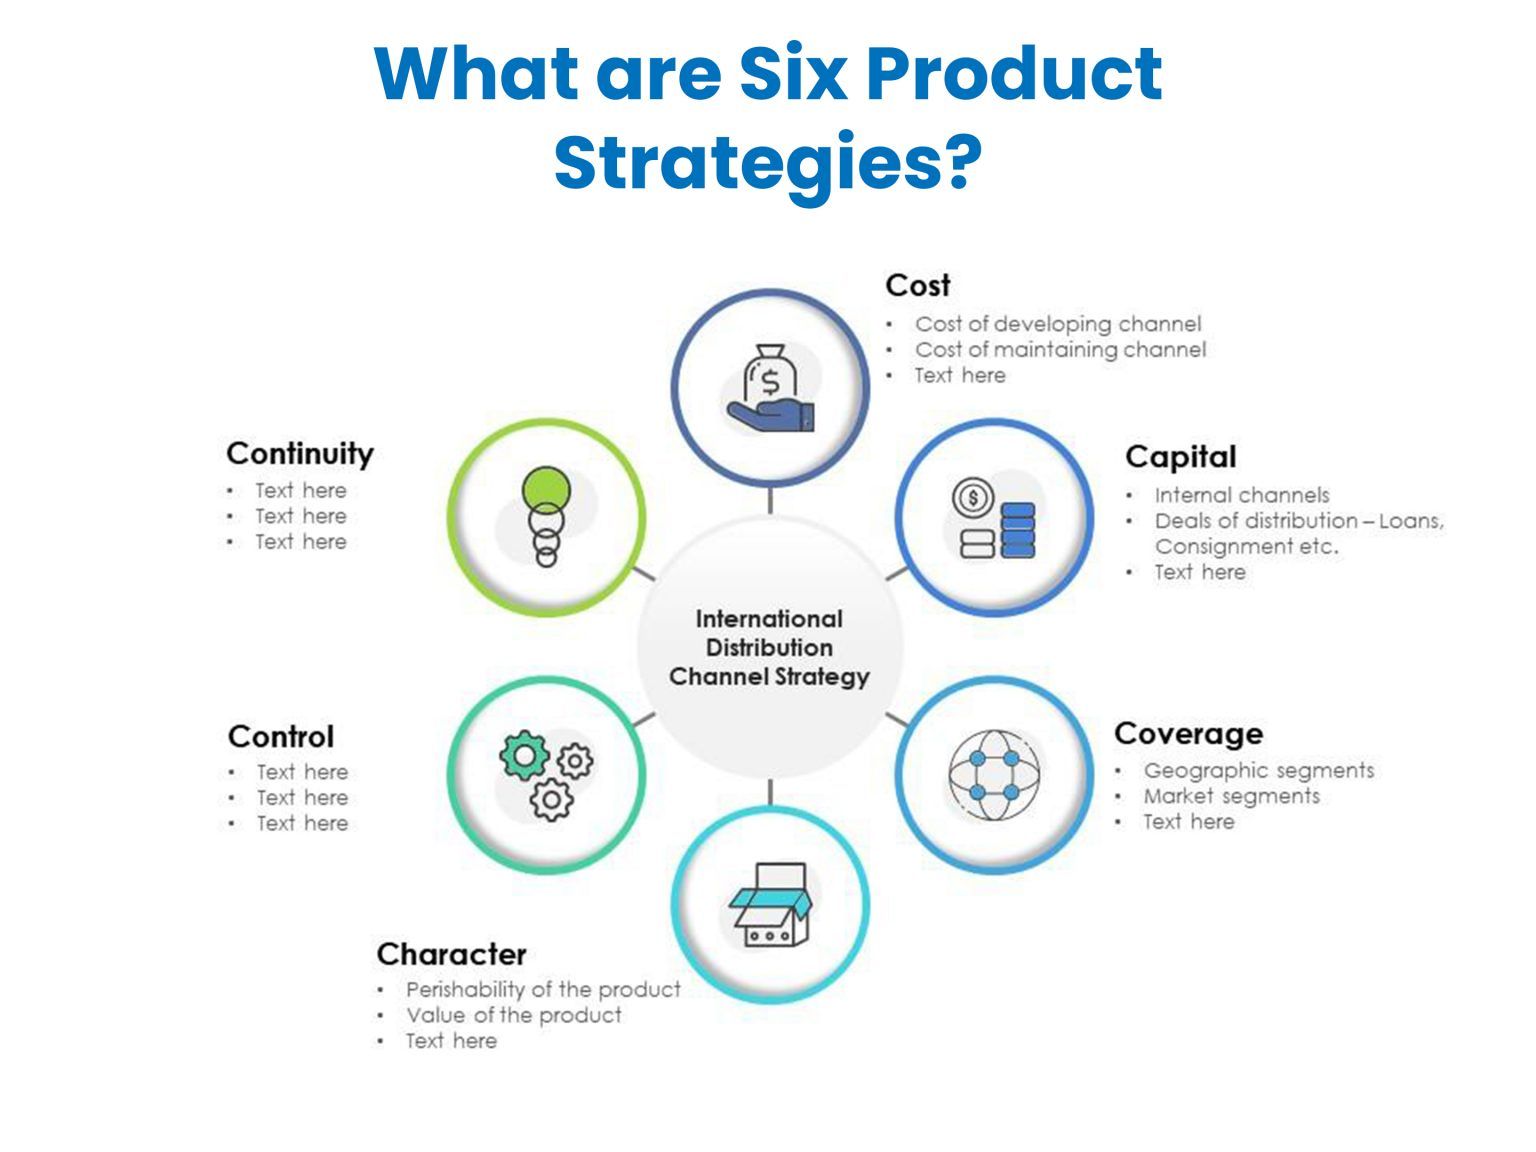 Six Product Strategies
